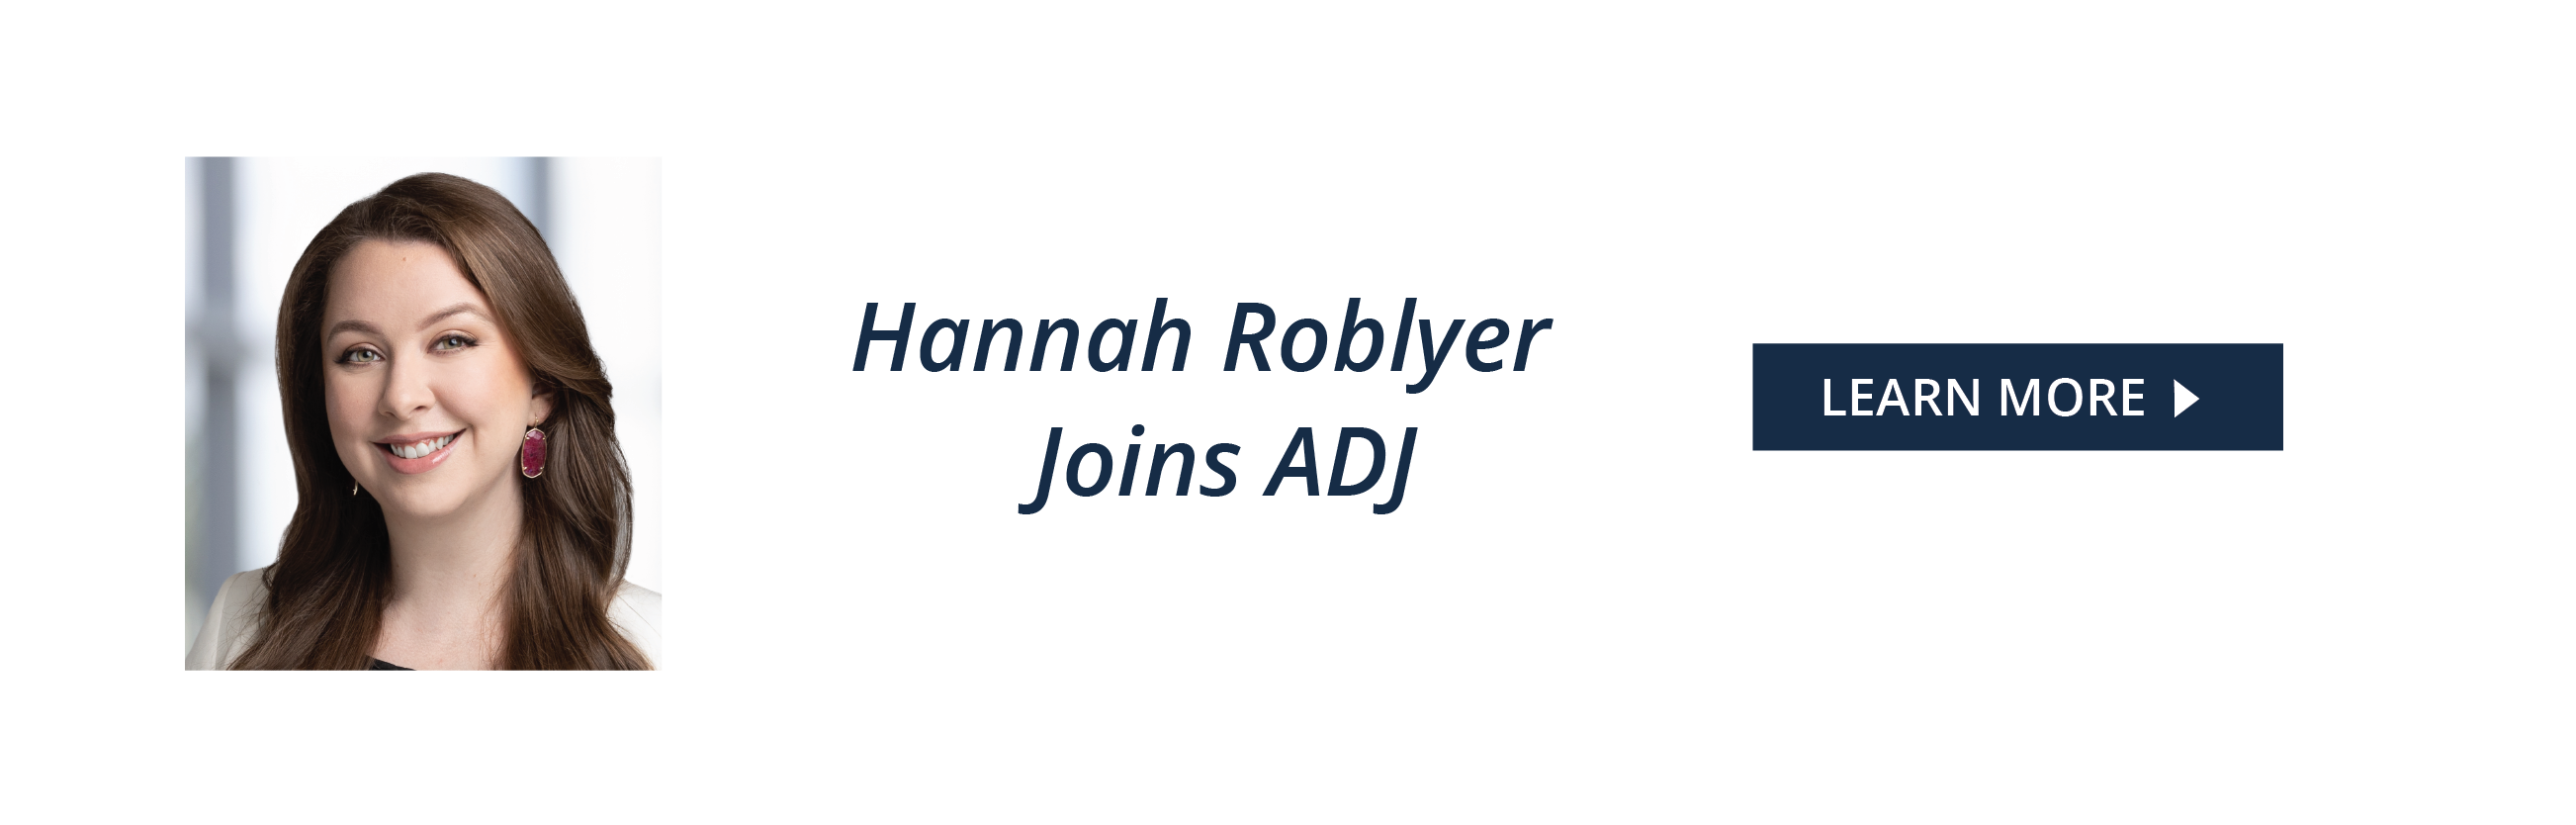 Hannah Roblyer Slider_6Chambers copy 3